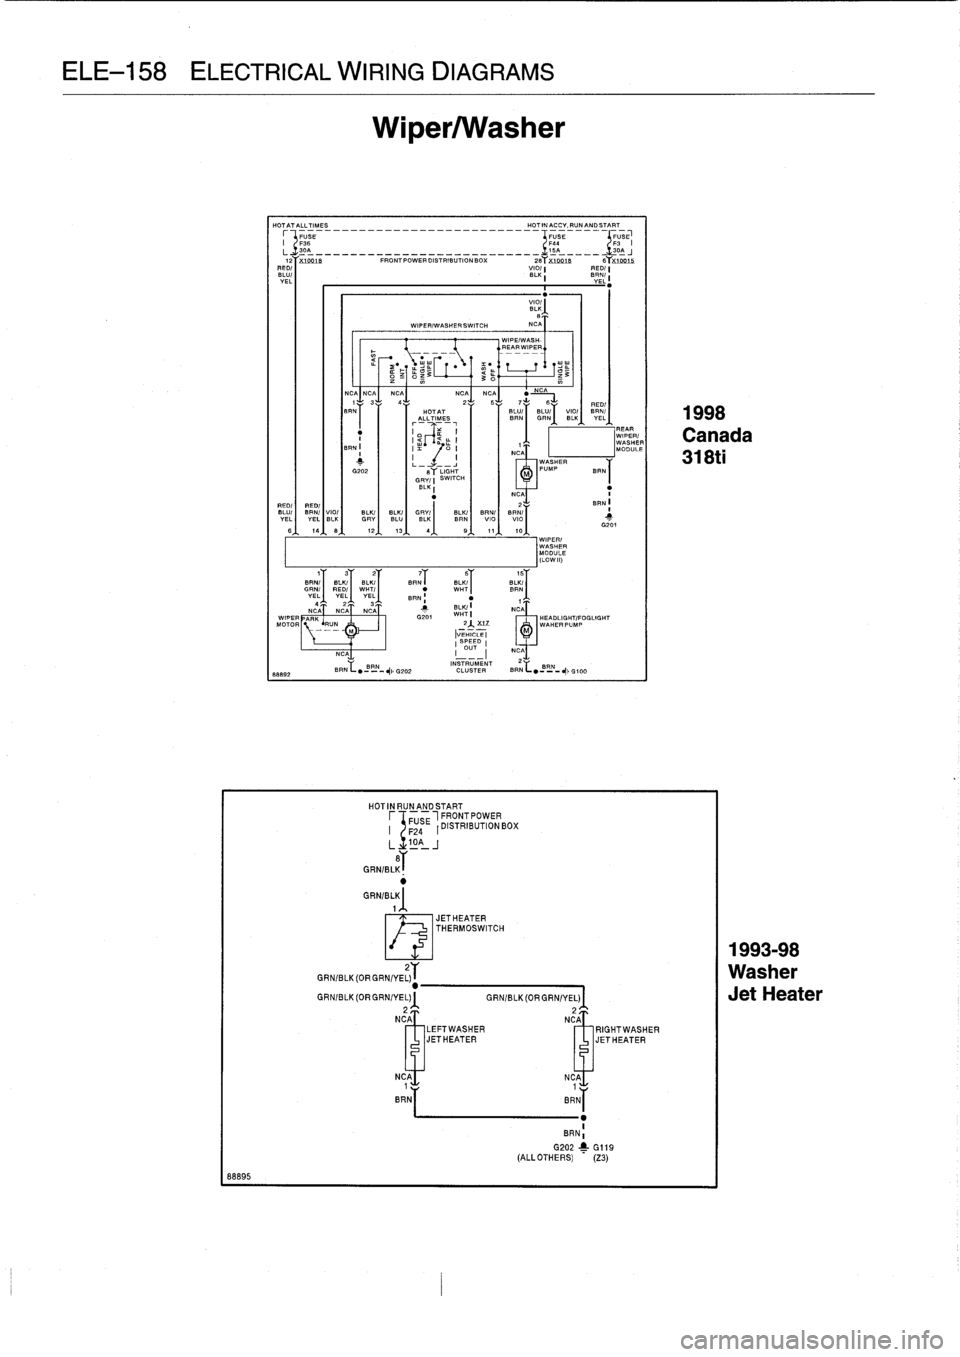 E36 Hk Wiring Diagram